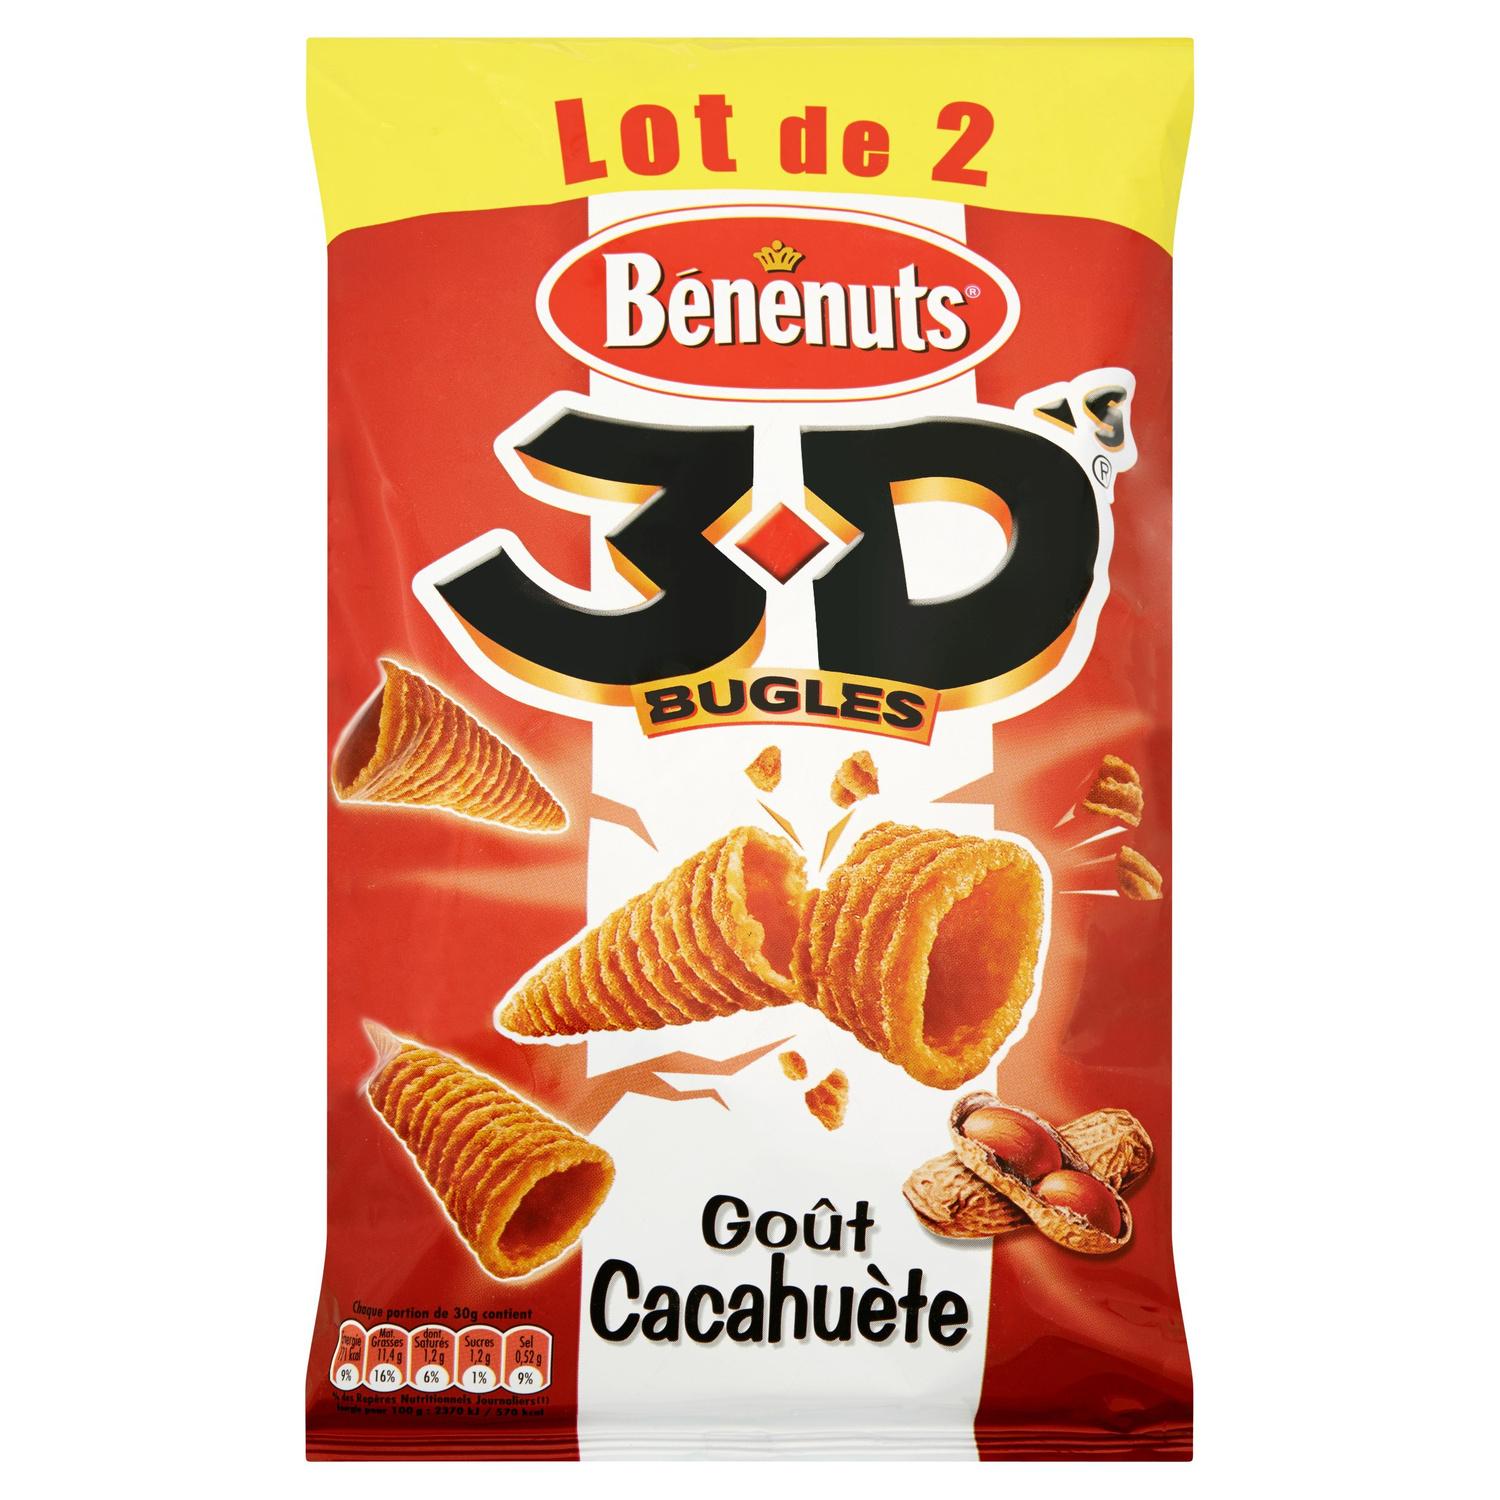 Chips 3D's Bugles goût fromage lot de 2 - BENENUTS - 170 g